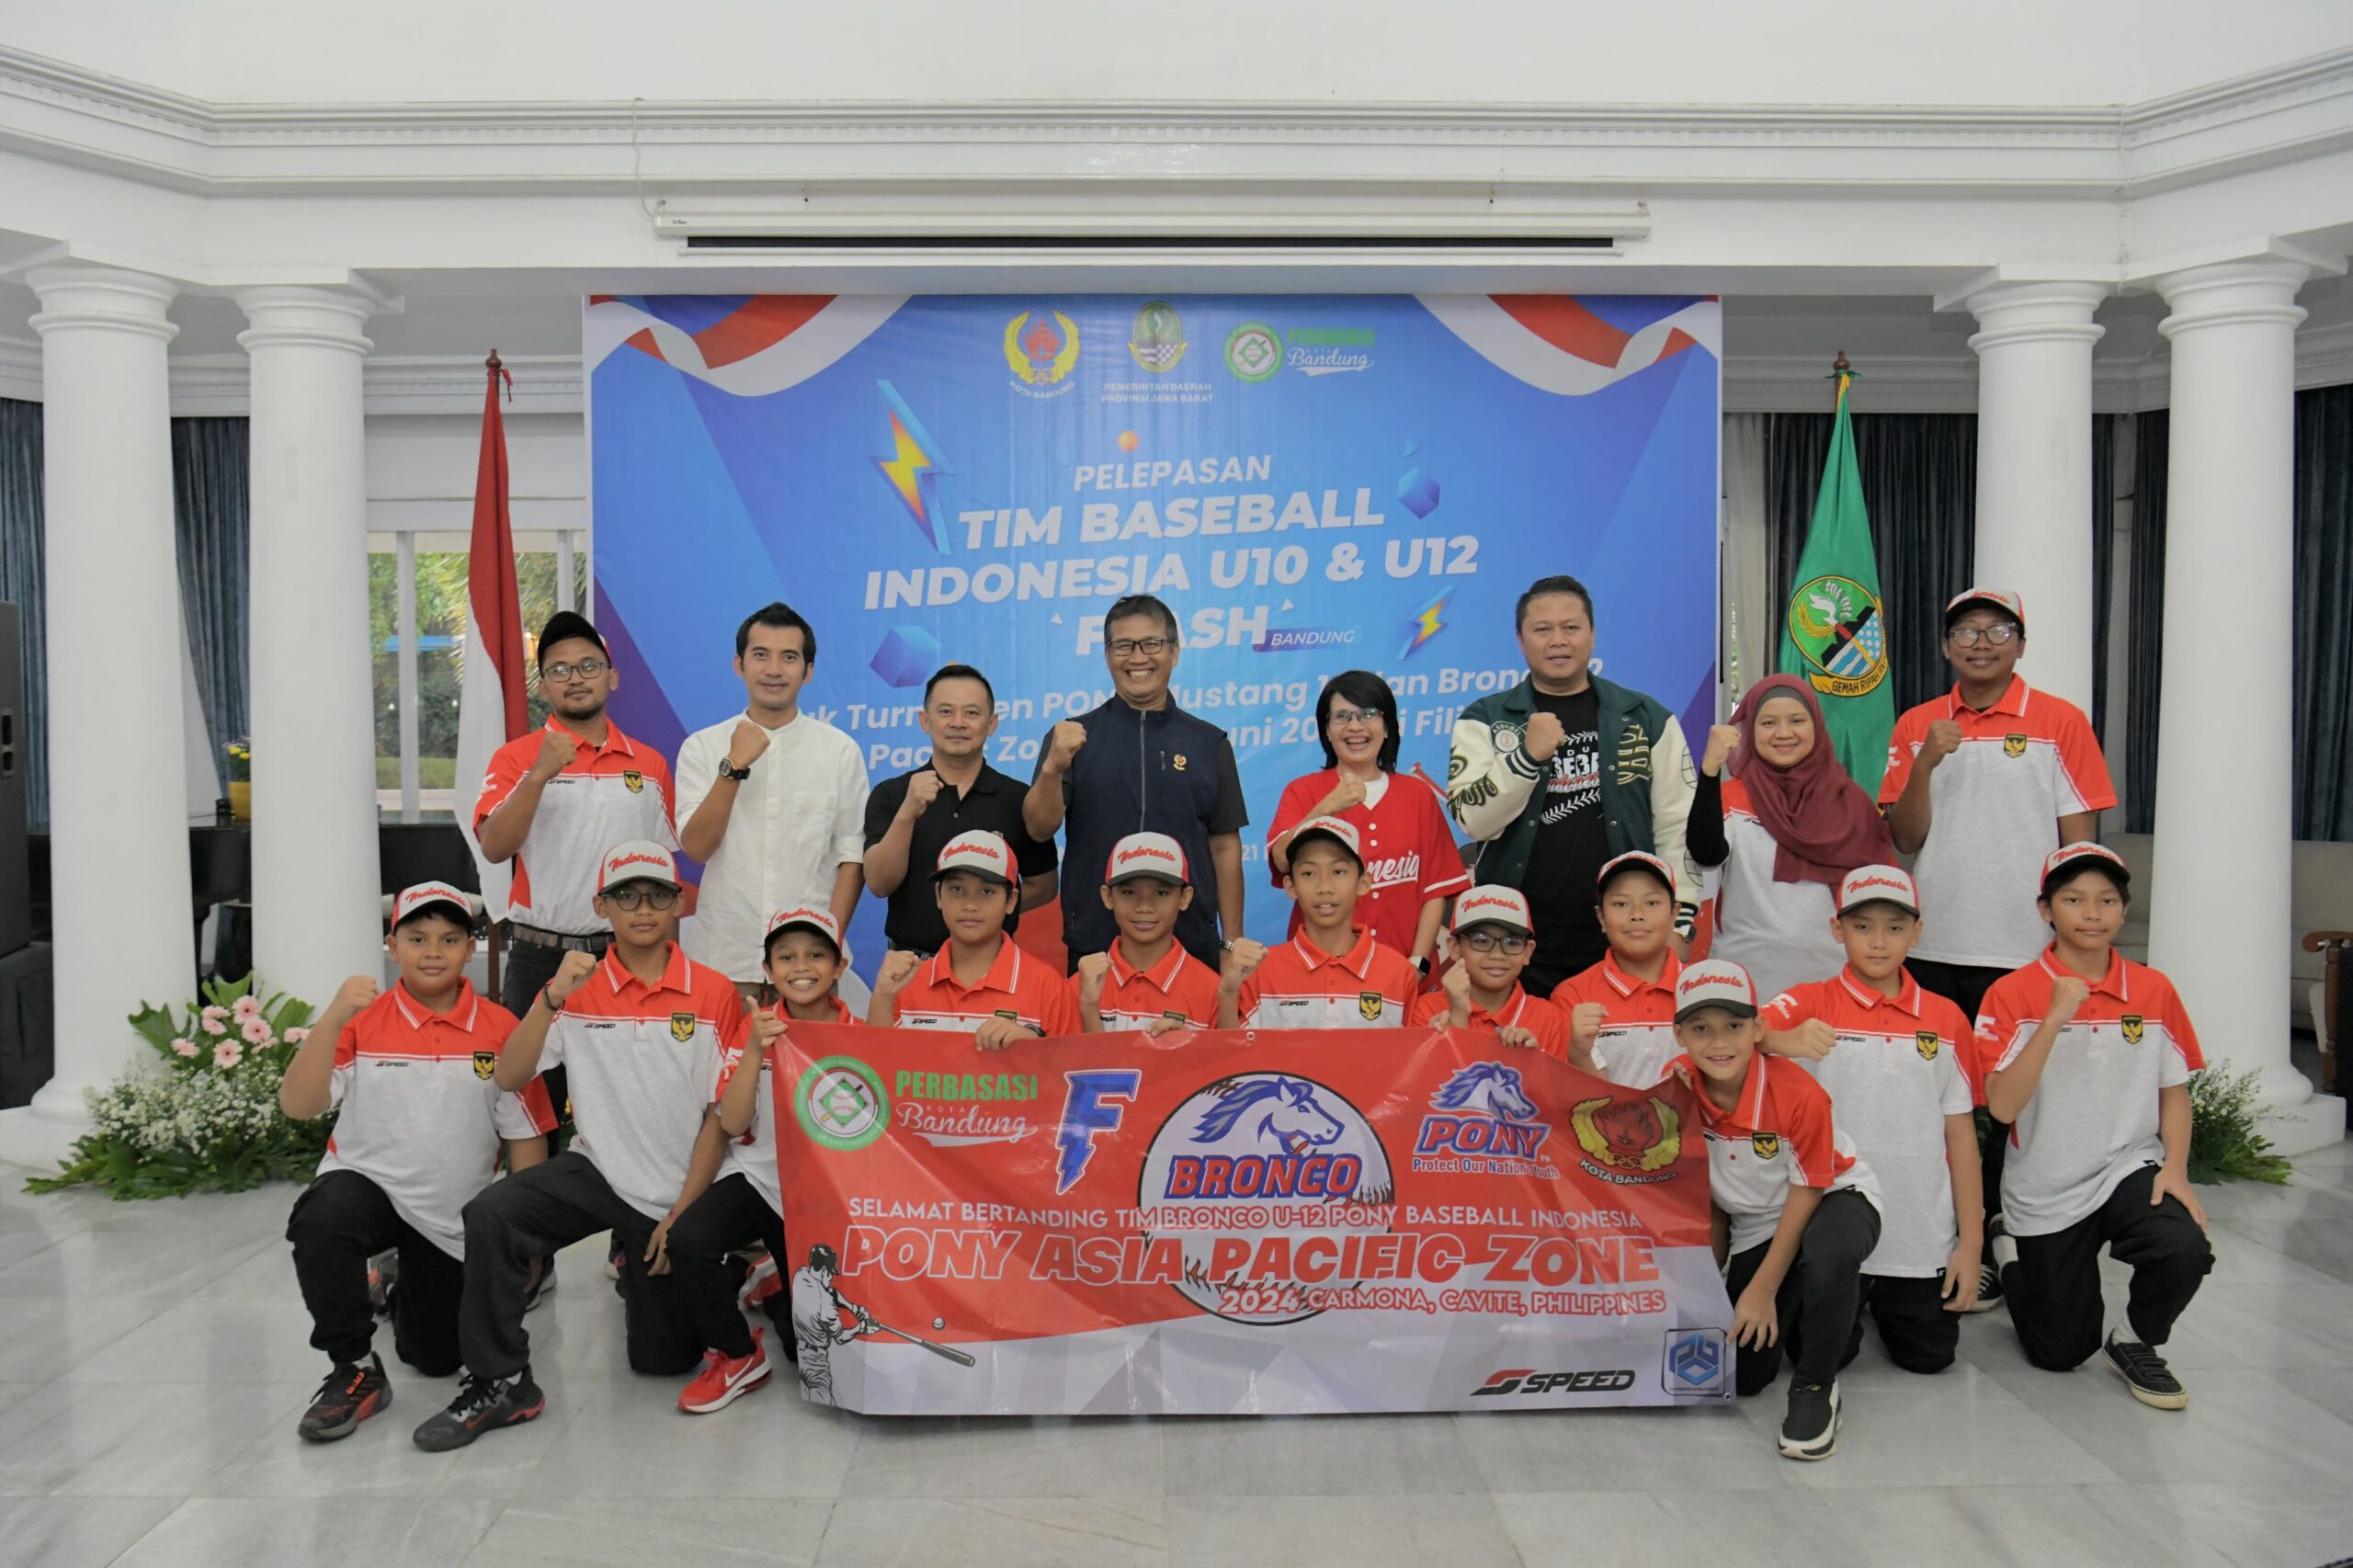 Tim Baseball Flash Bandung